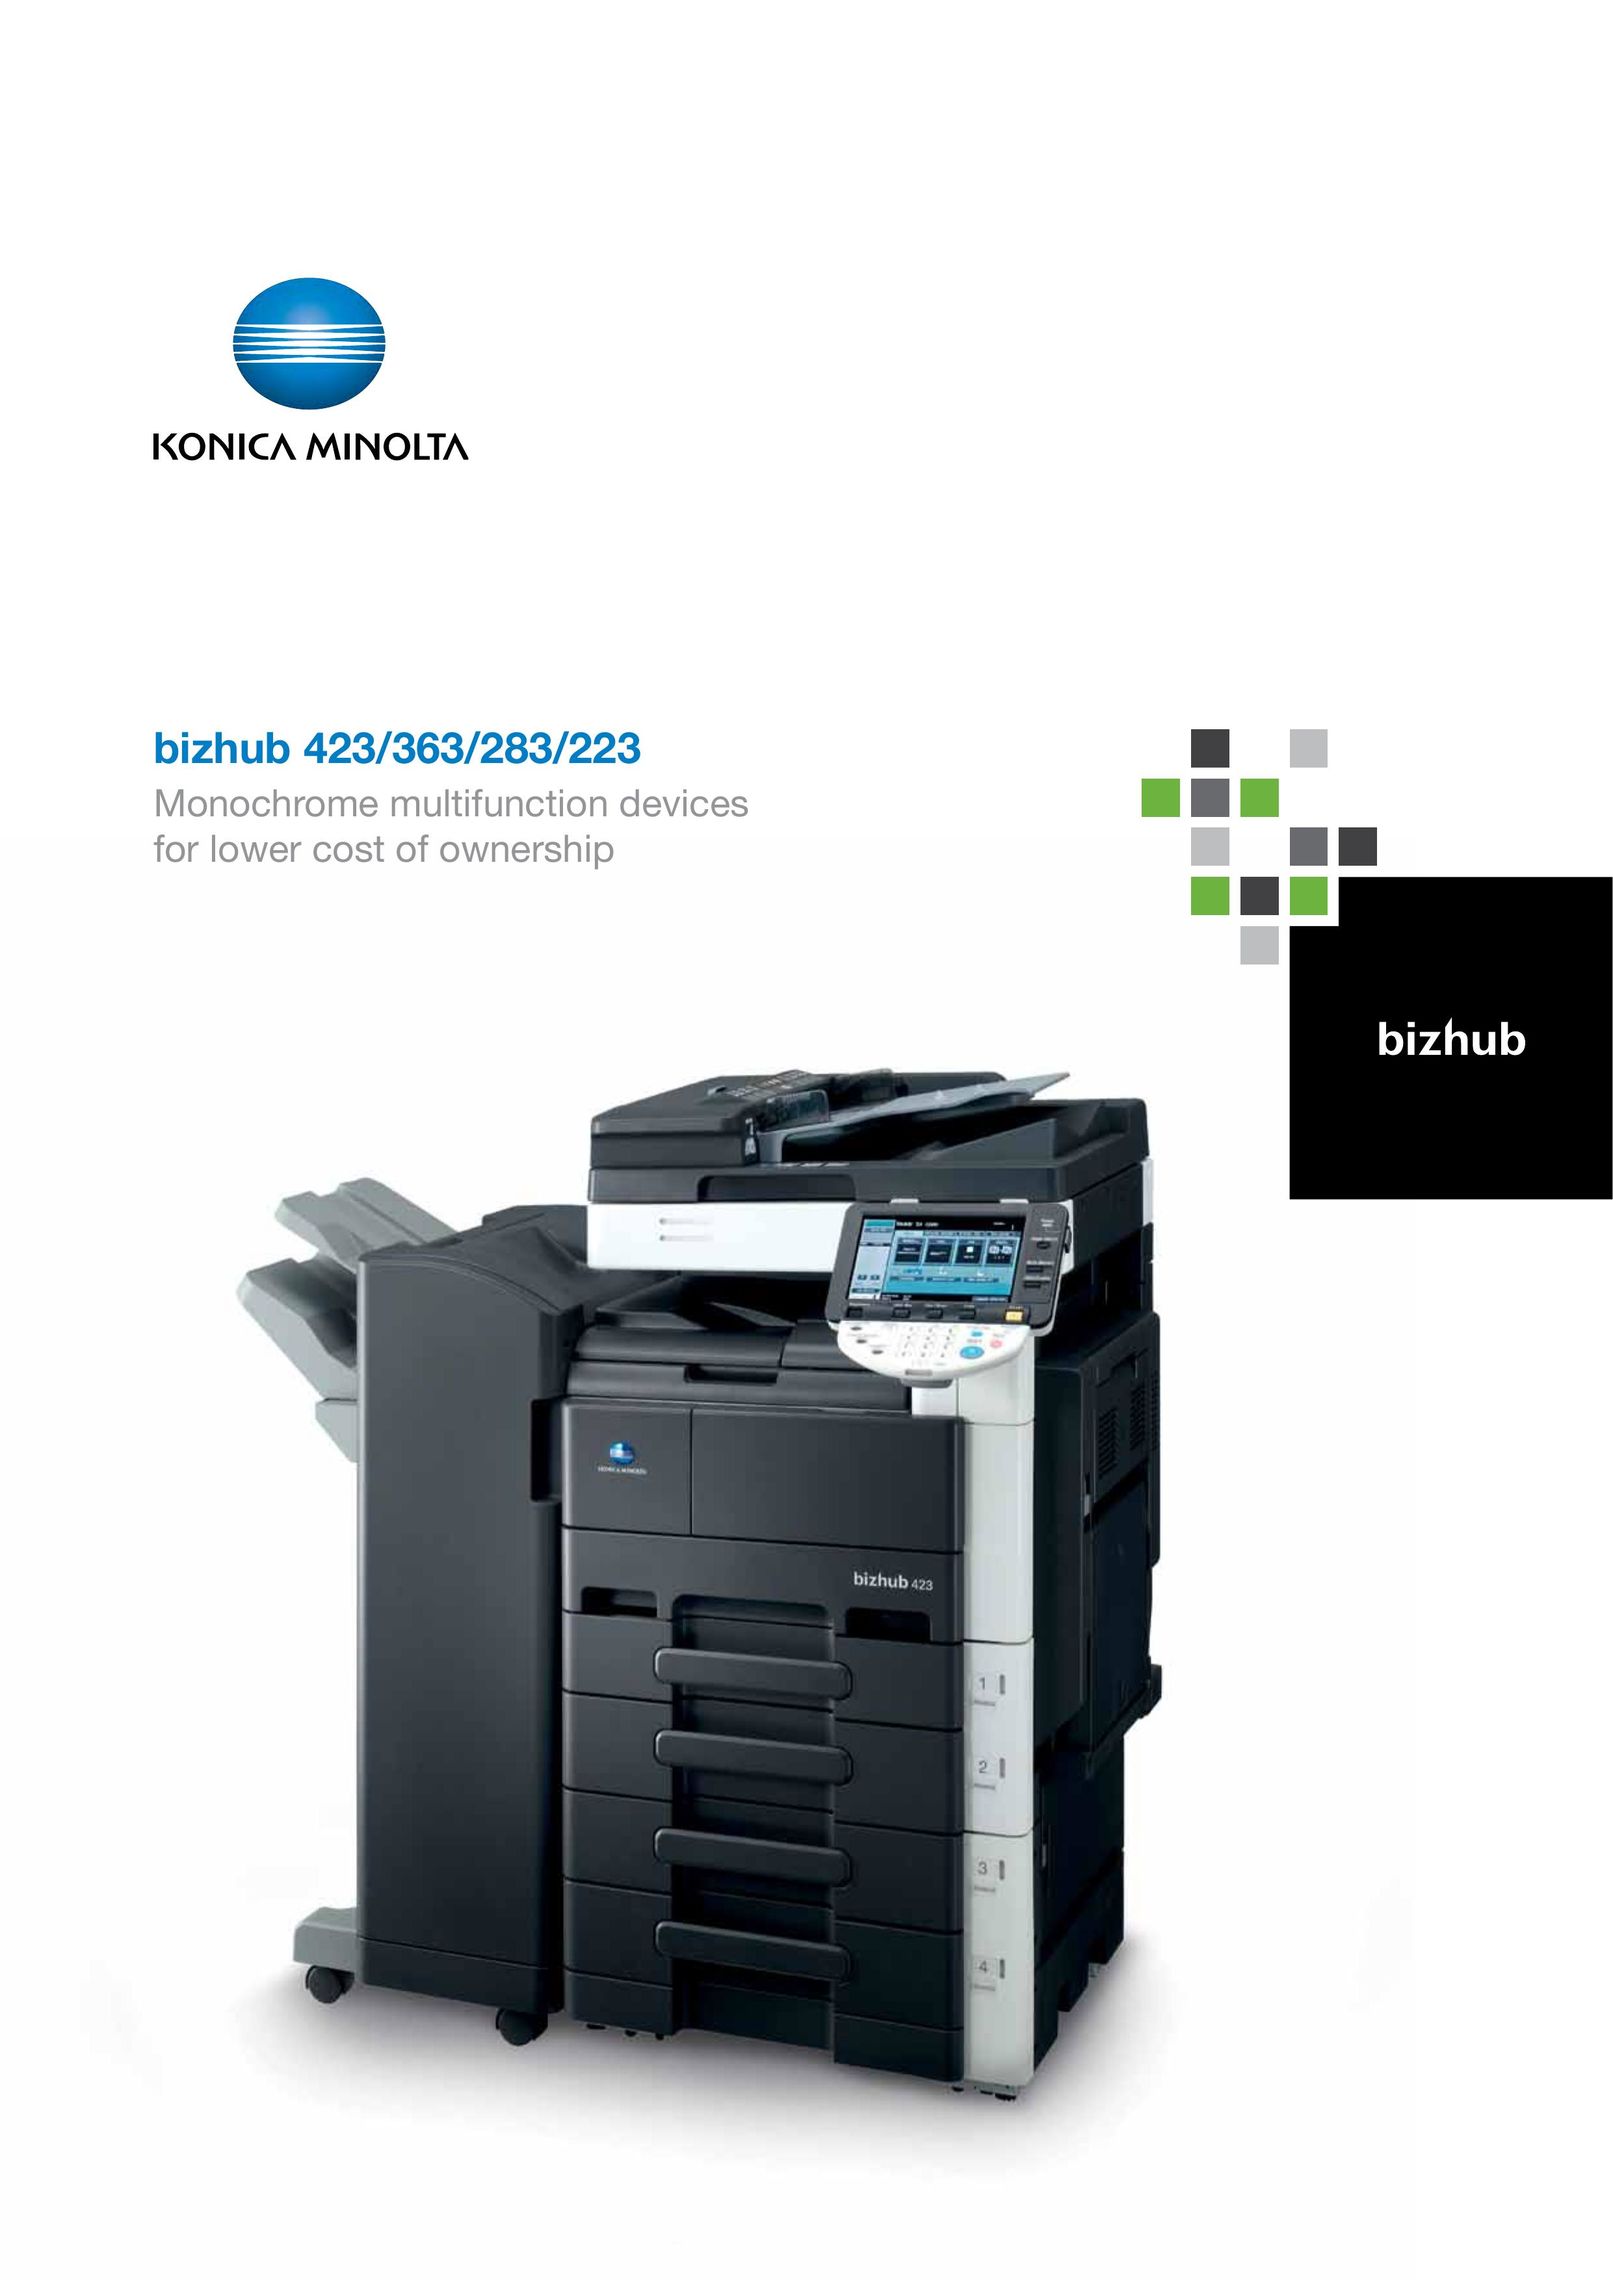 Konica Minolta 223 All in One Printer User Manual